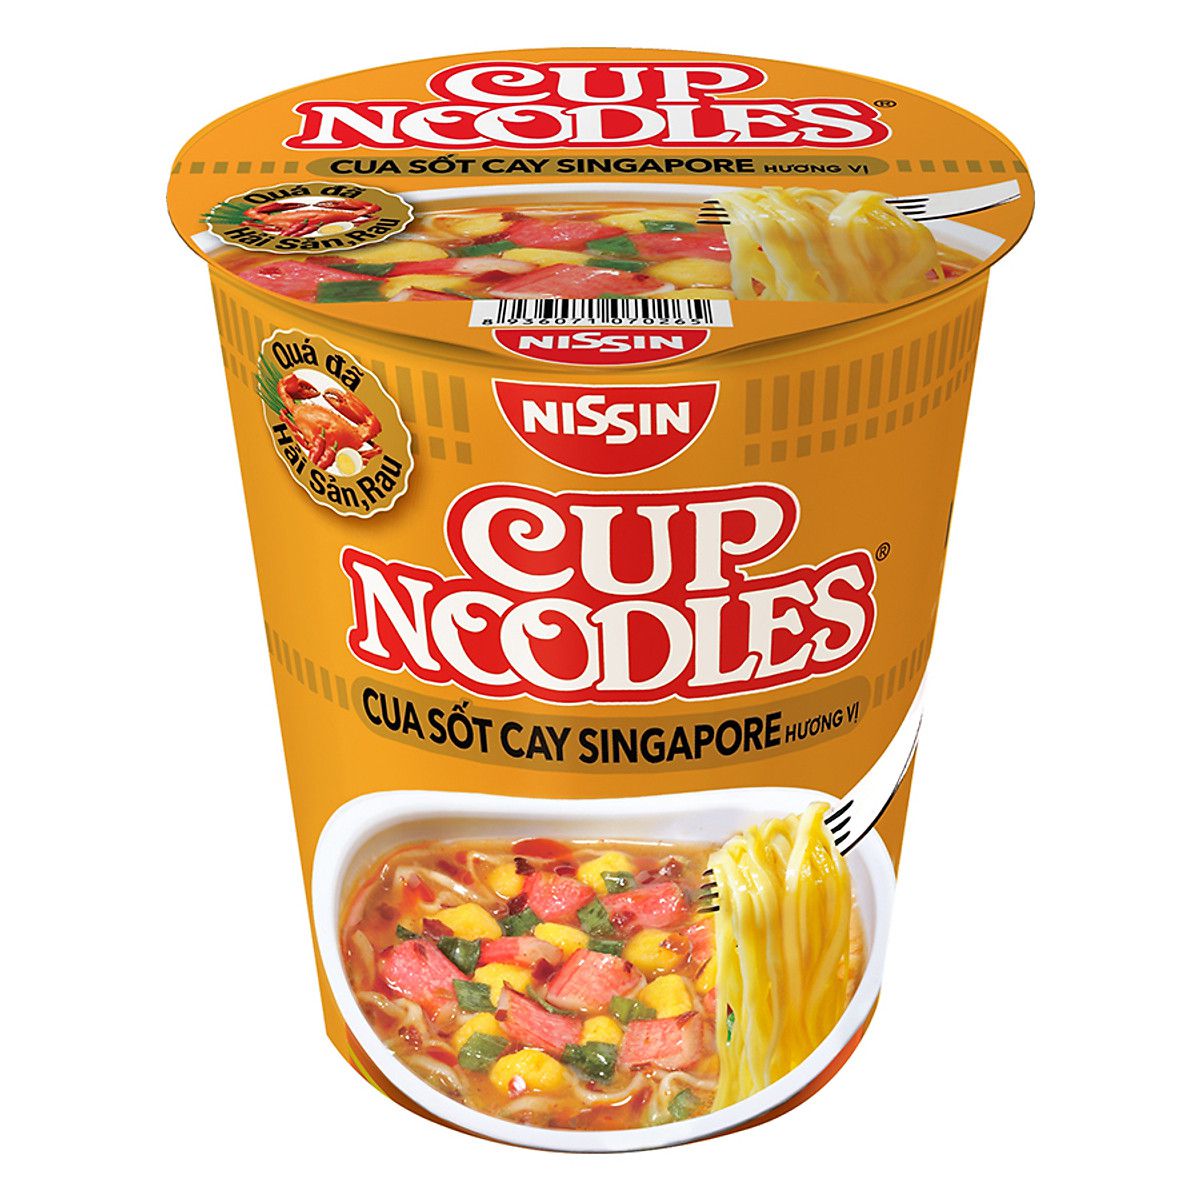 Nissin лапша. Nissin Cup Noodles. Лапша. Лапша Cup Noodle. Японская лапша Nissin.